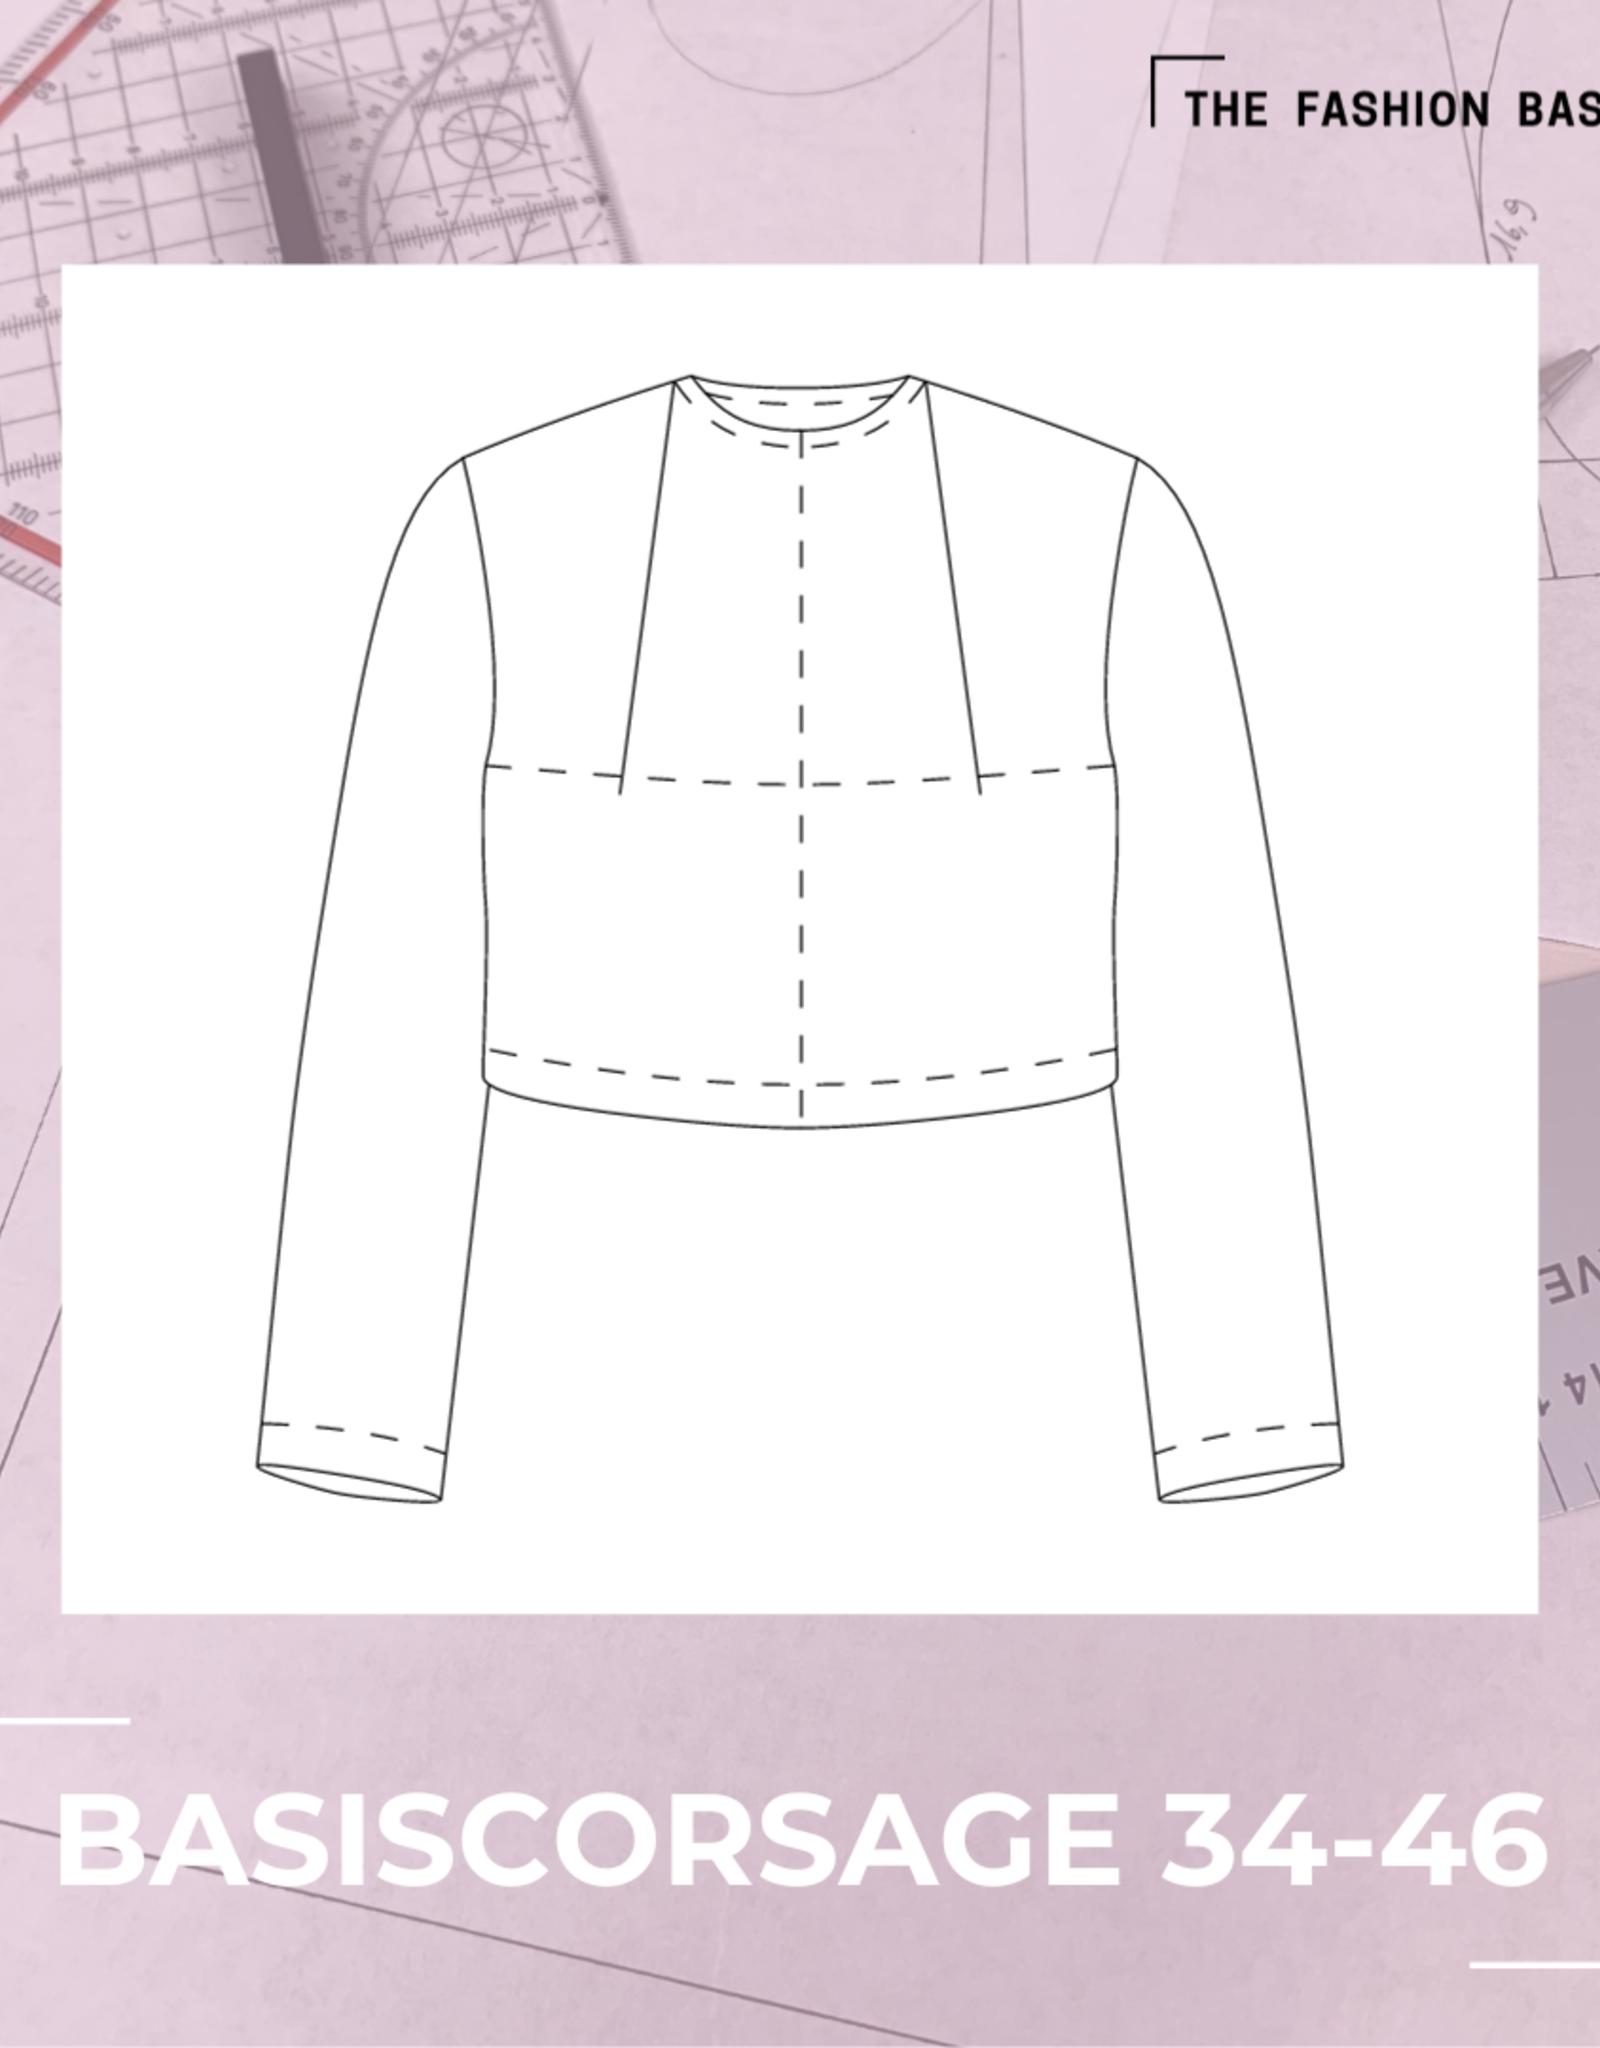 The Fashion Basement Basiscorsage 34-46